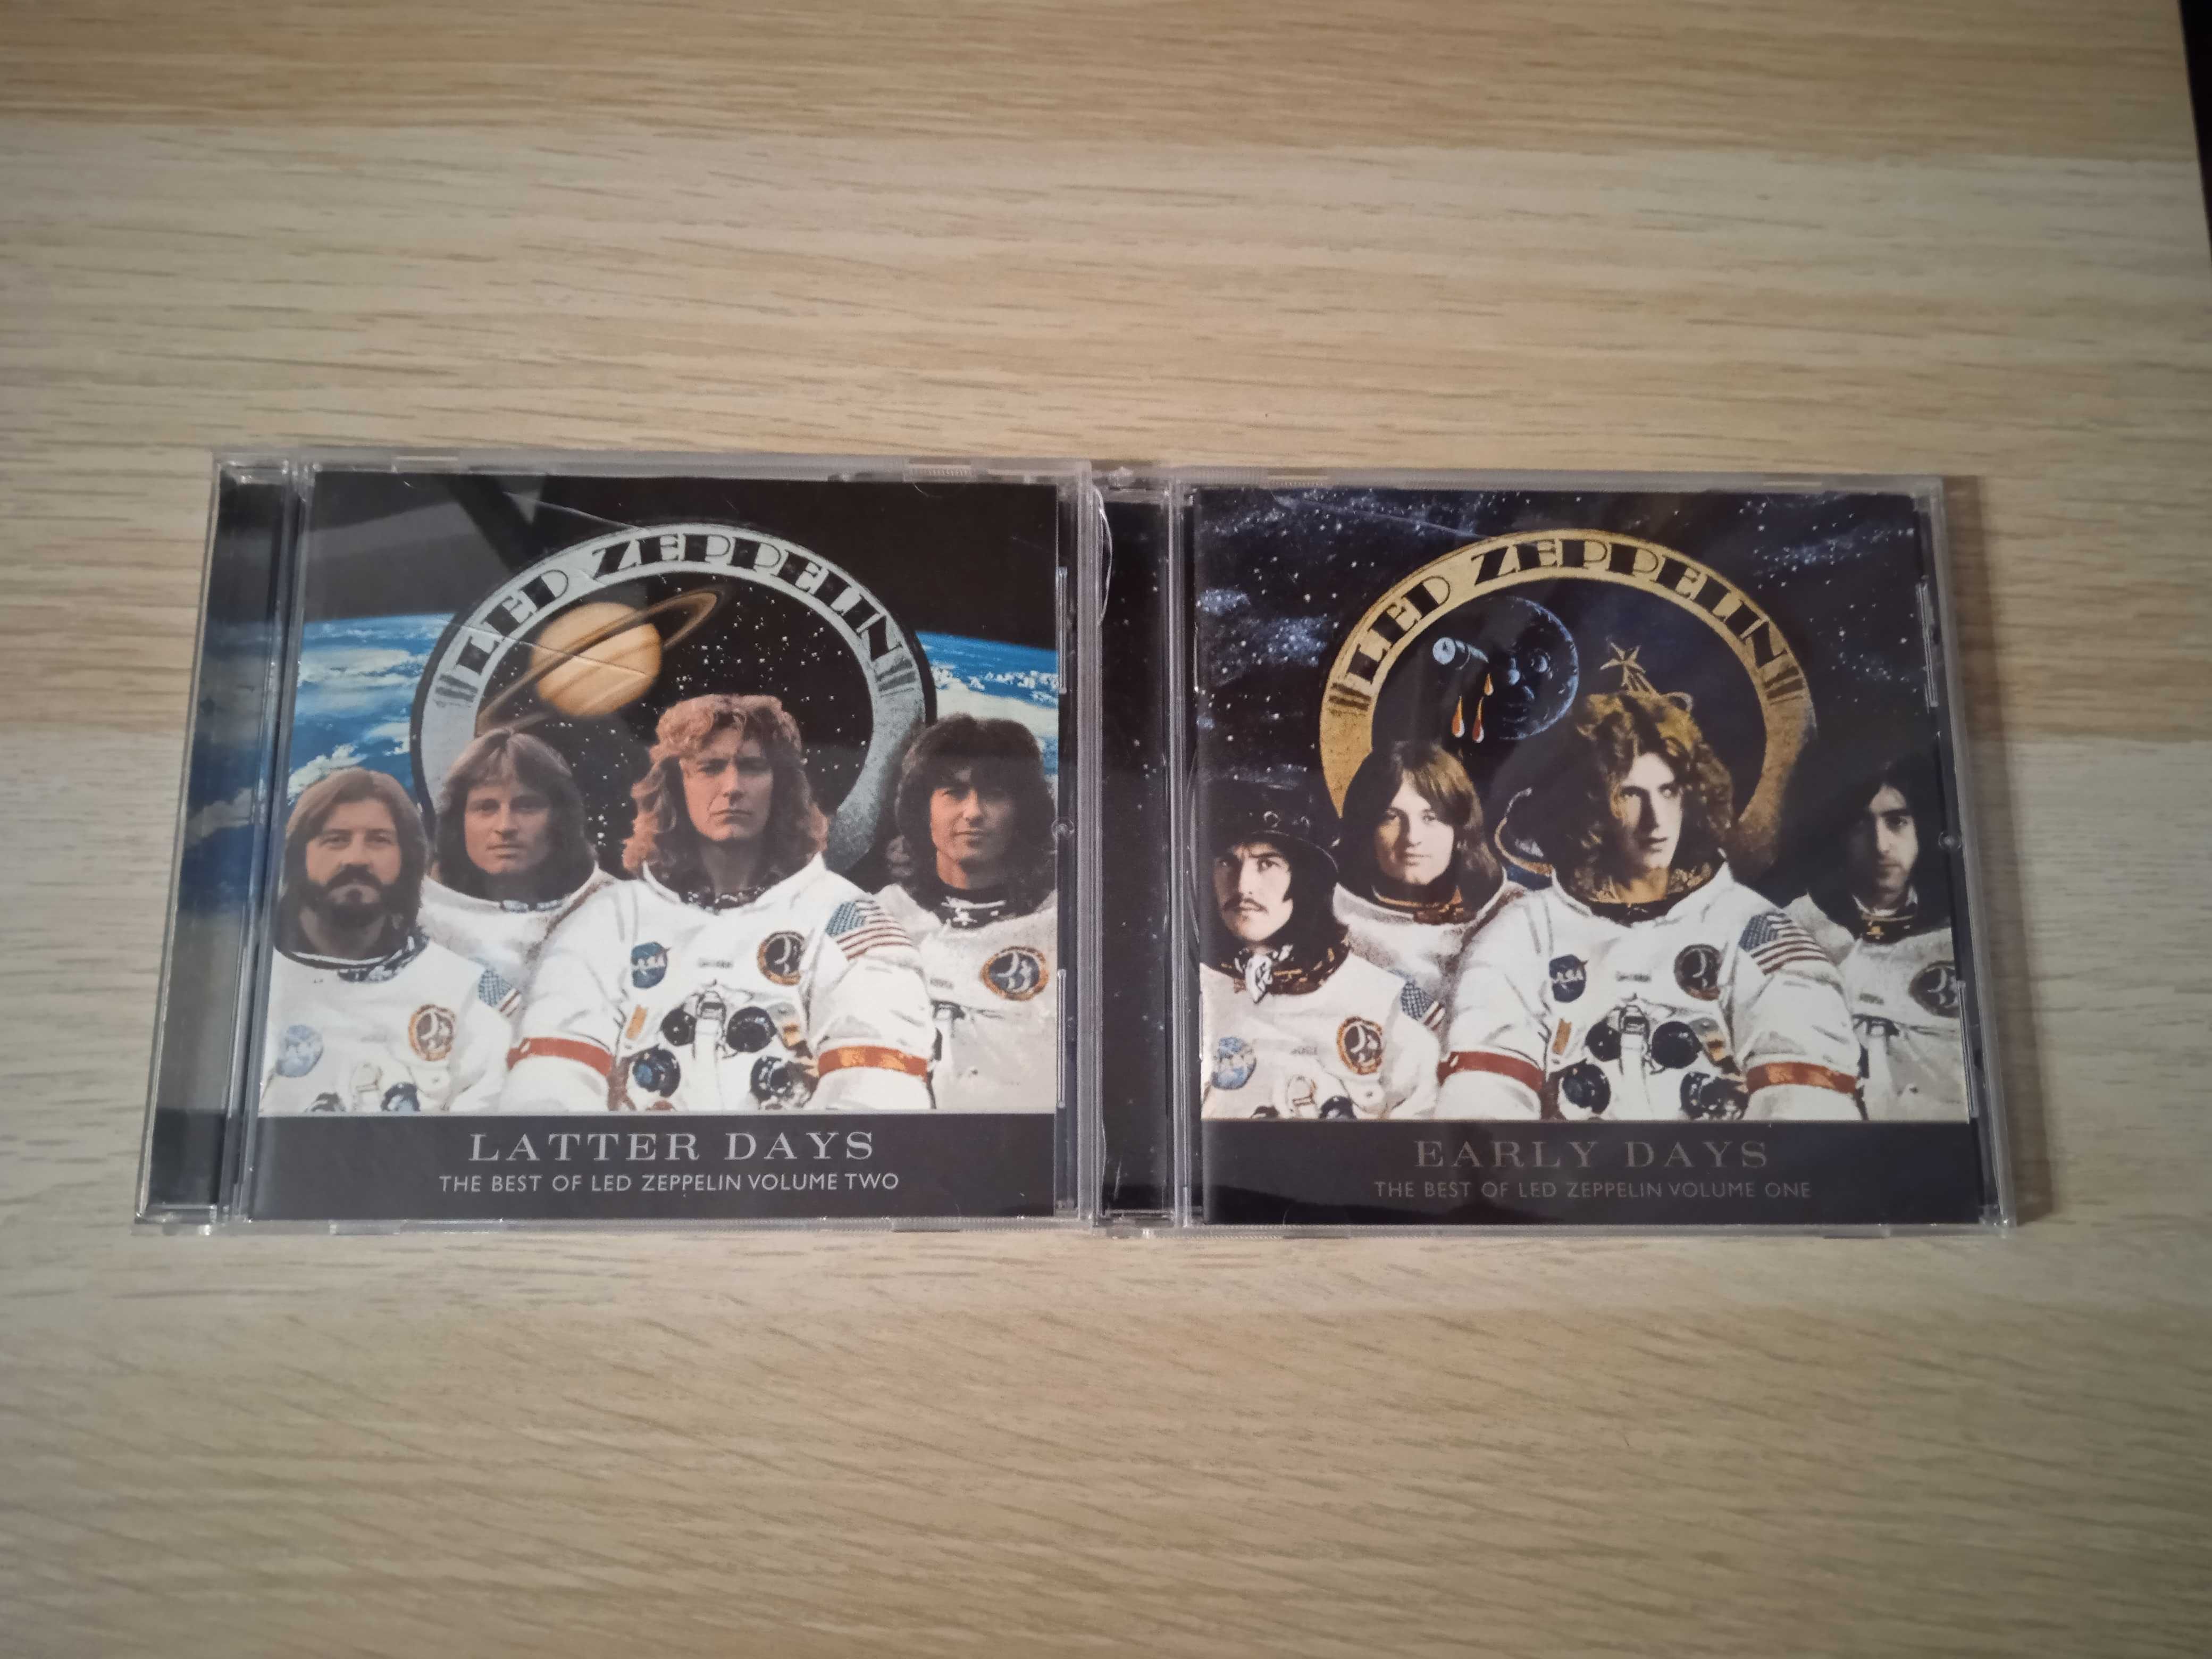 Led Zeppelin - Early Days Volume One + Latter Days Volume Two 2 CD